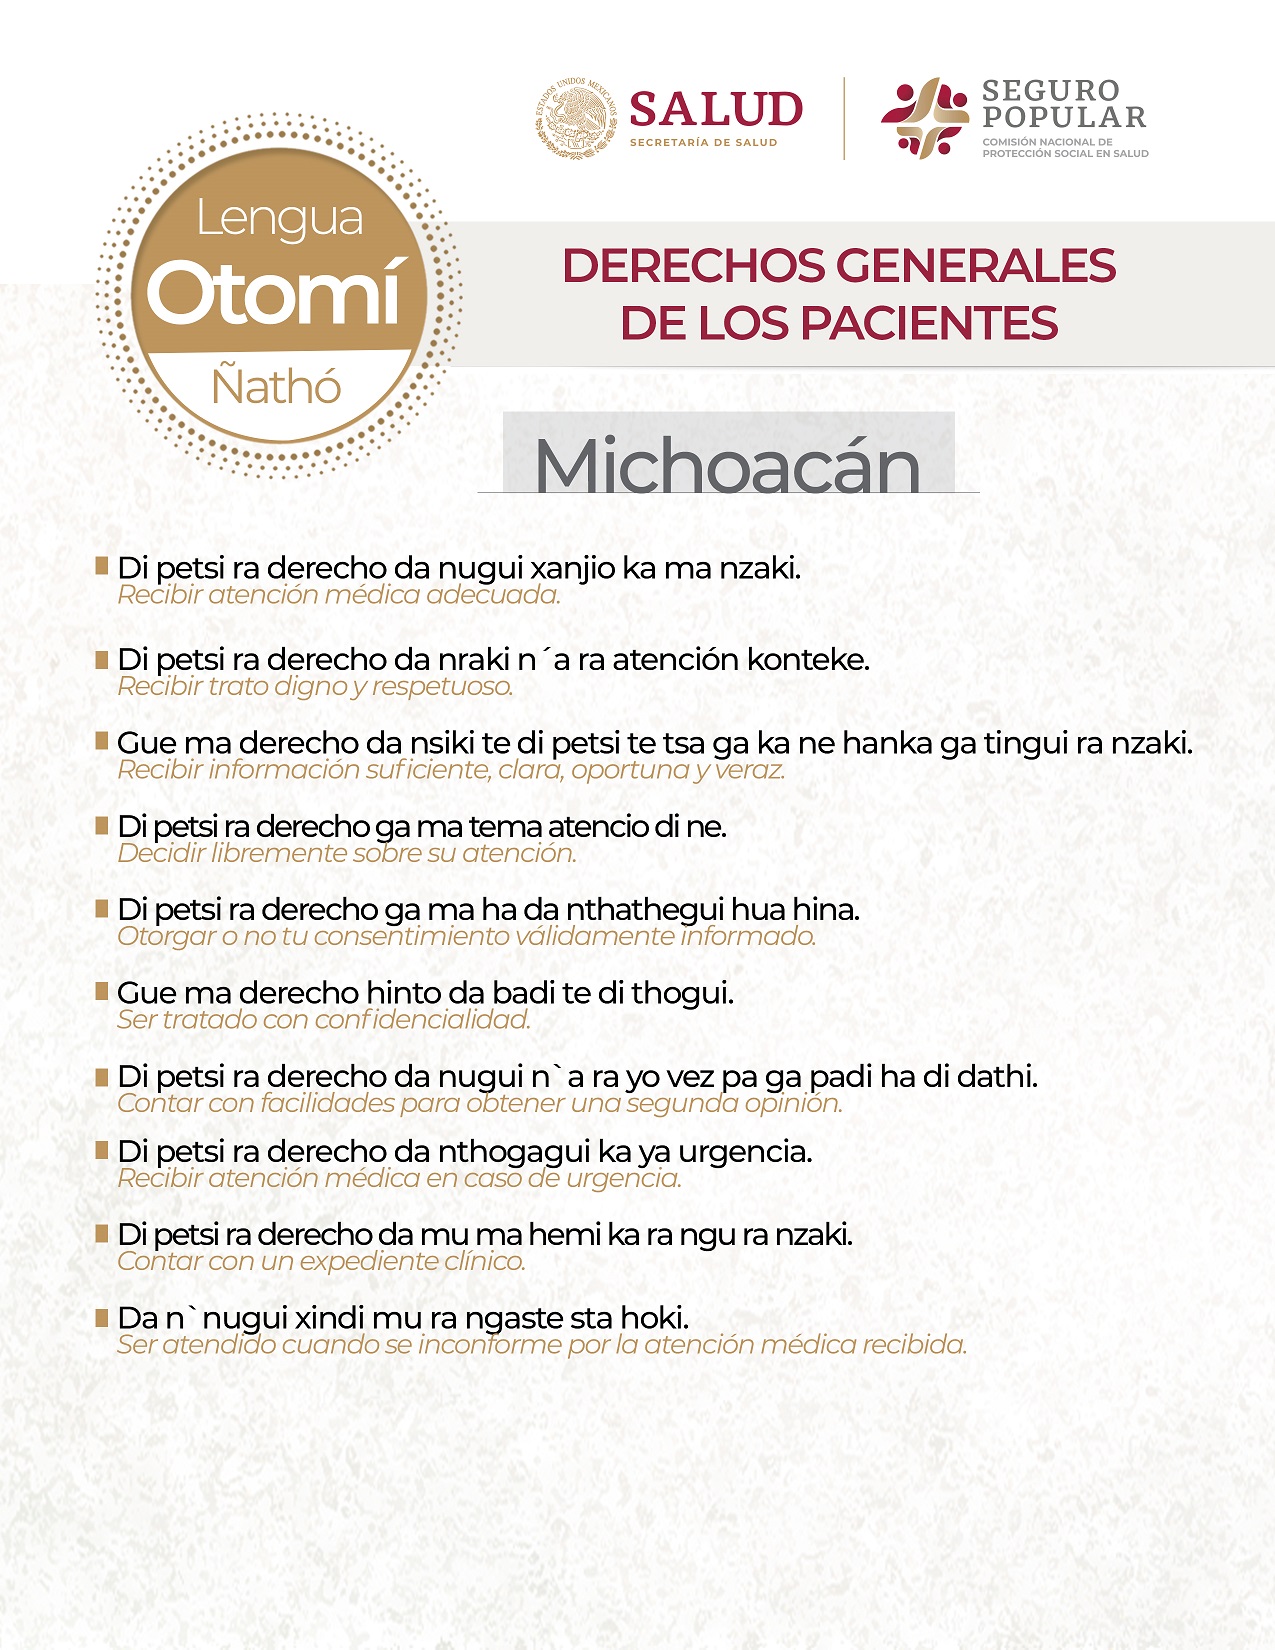 /cms/uploads/image/file/541121/Lengua-Otom_-Michoac_n_traducido.jpg